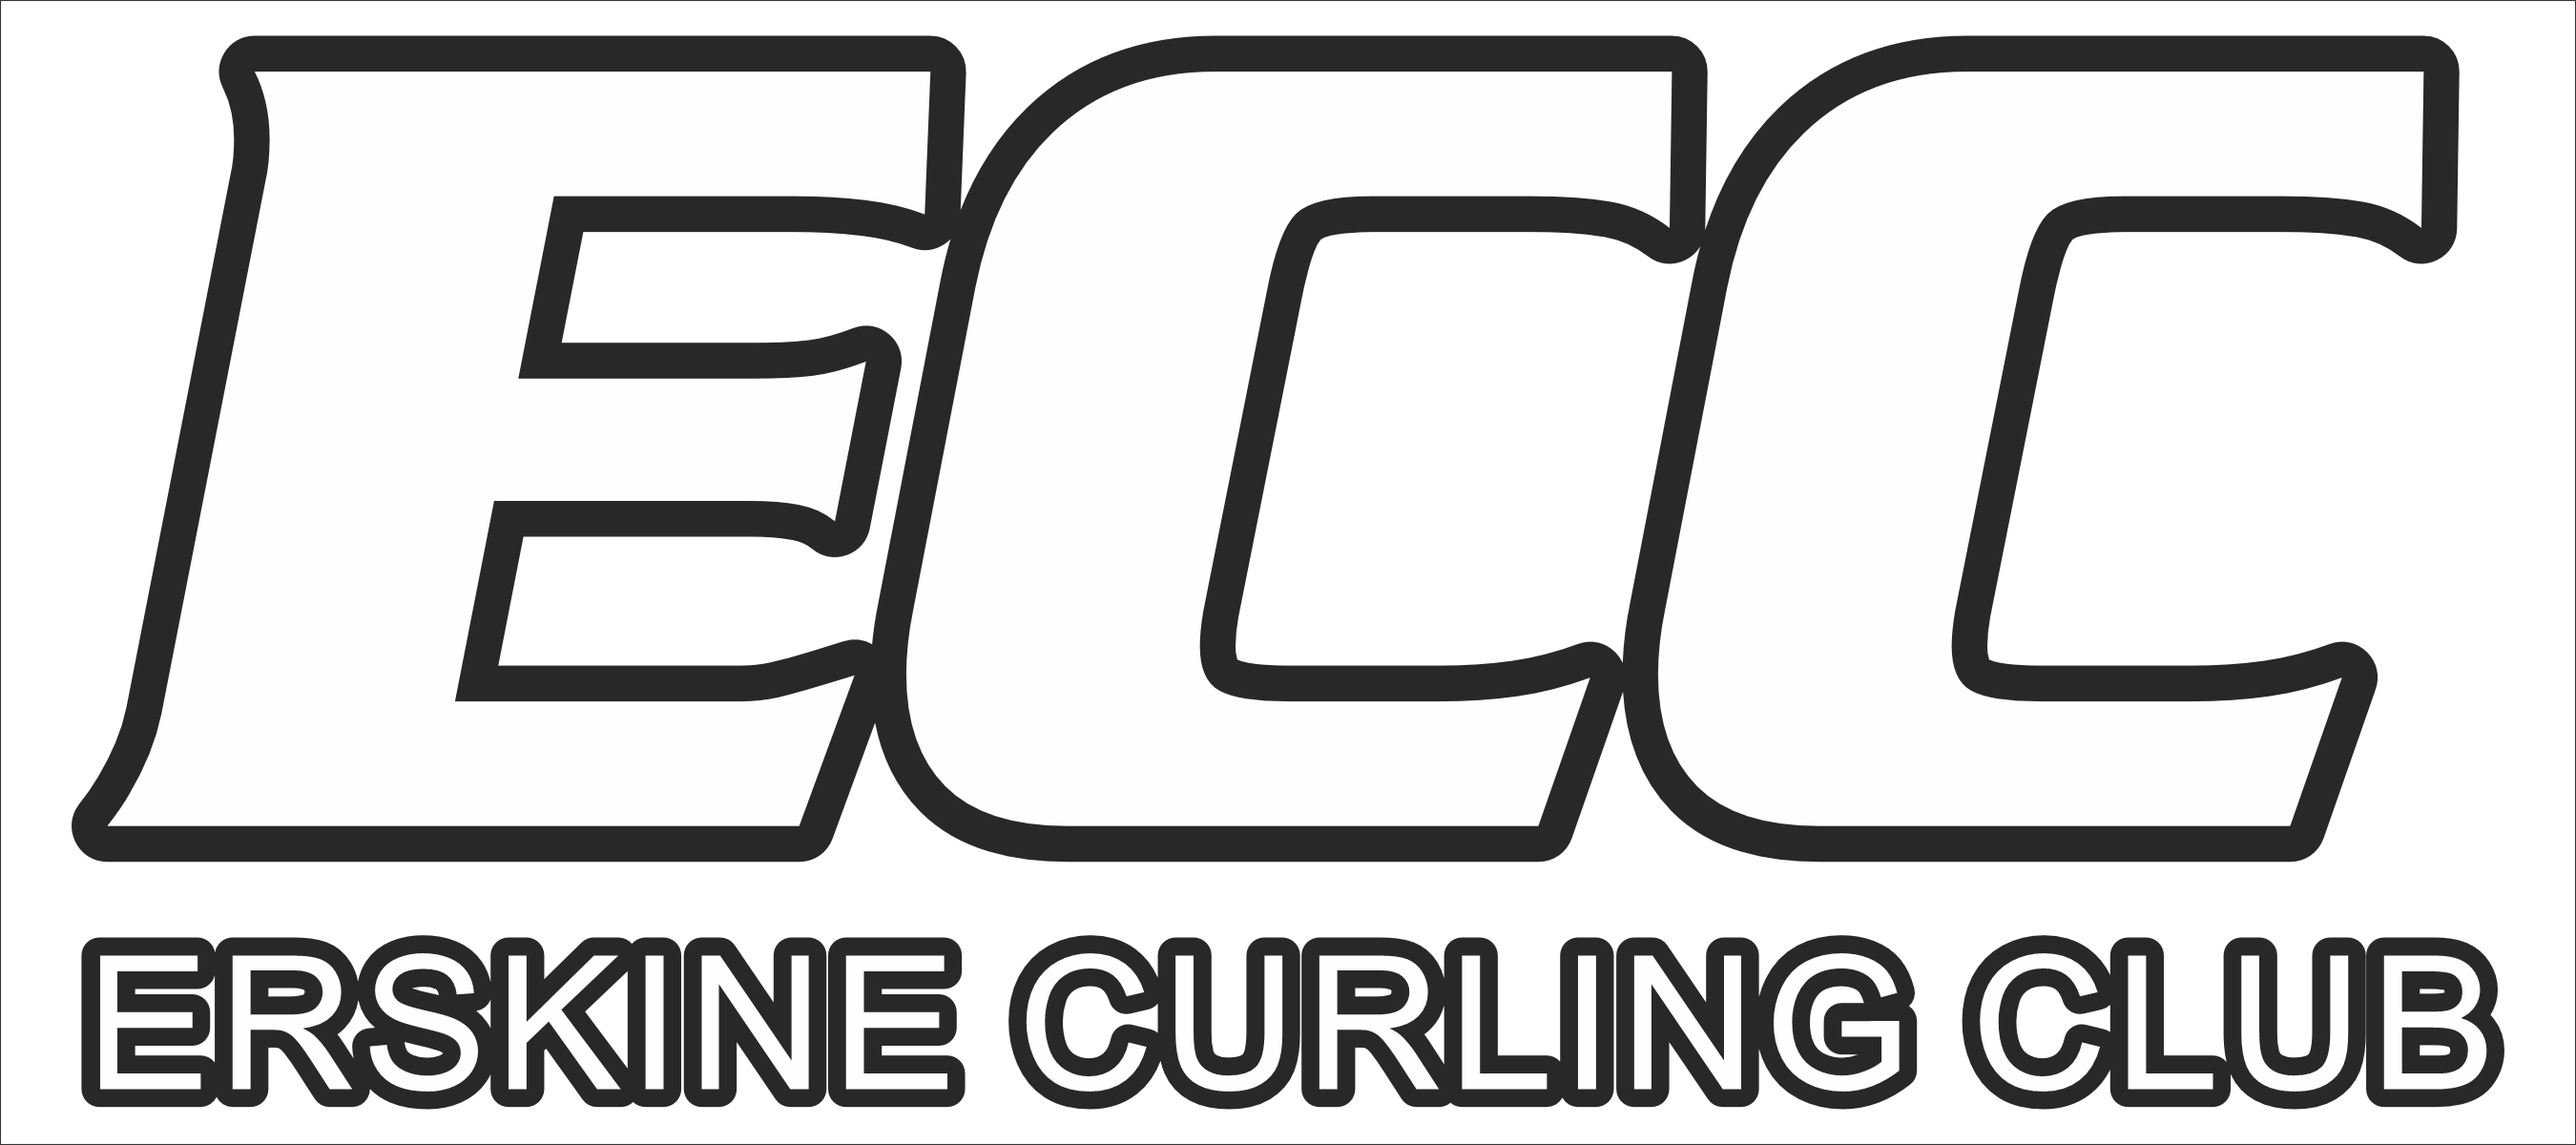 Brand logo, initials ECC with Erskine Curling Club below